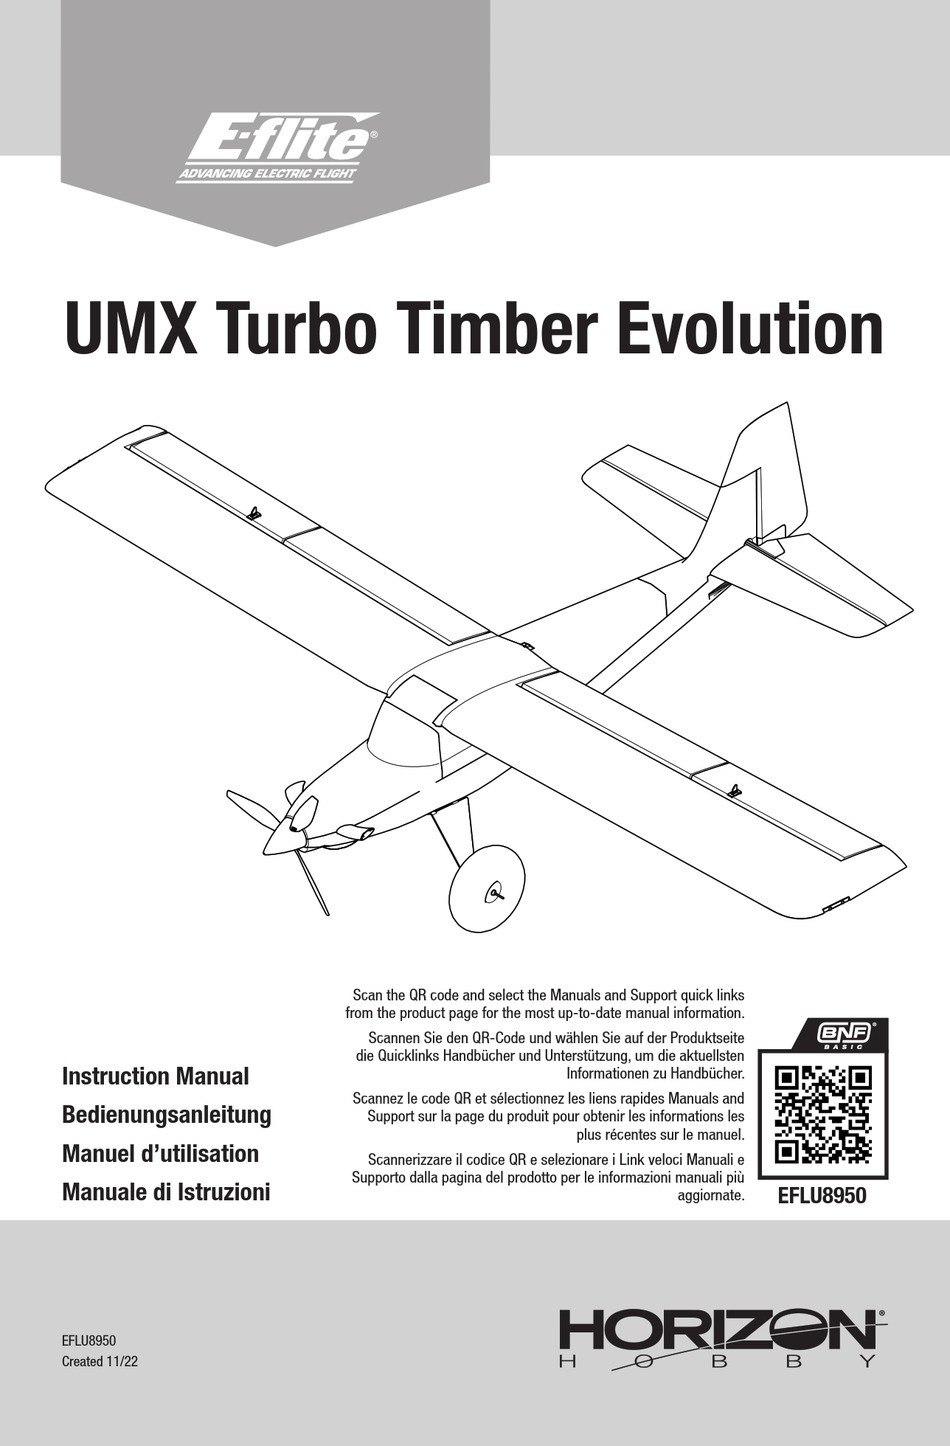 Horizon Hobby E Flite Umx Turbo Timber Evolution Instruction Manual Pdf Download Manualslib